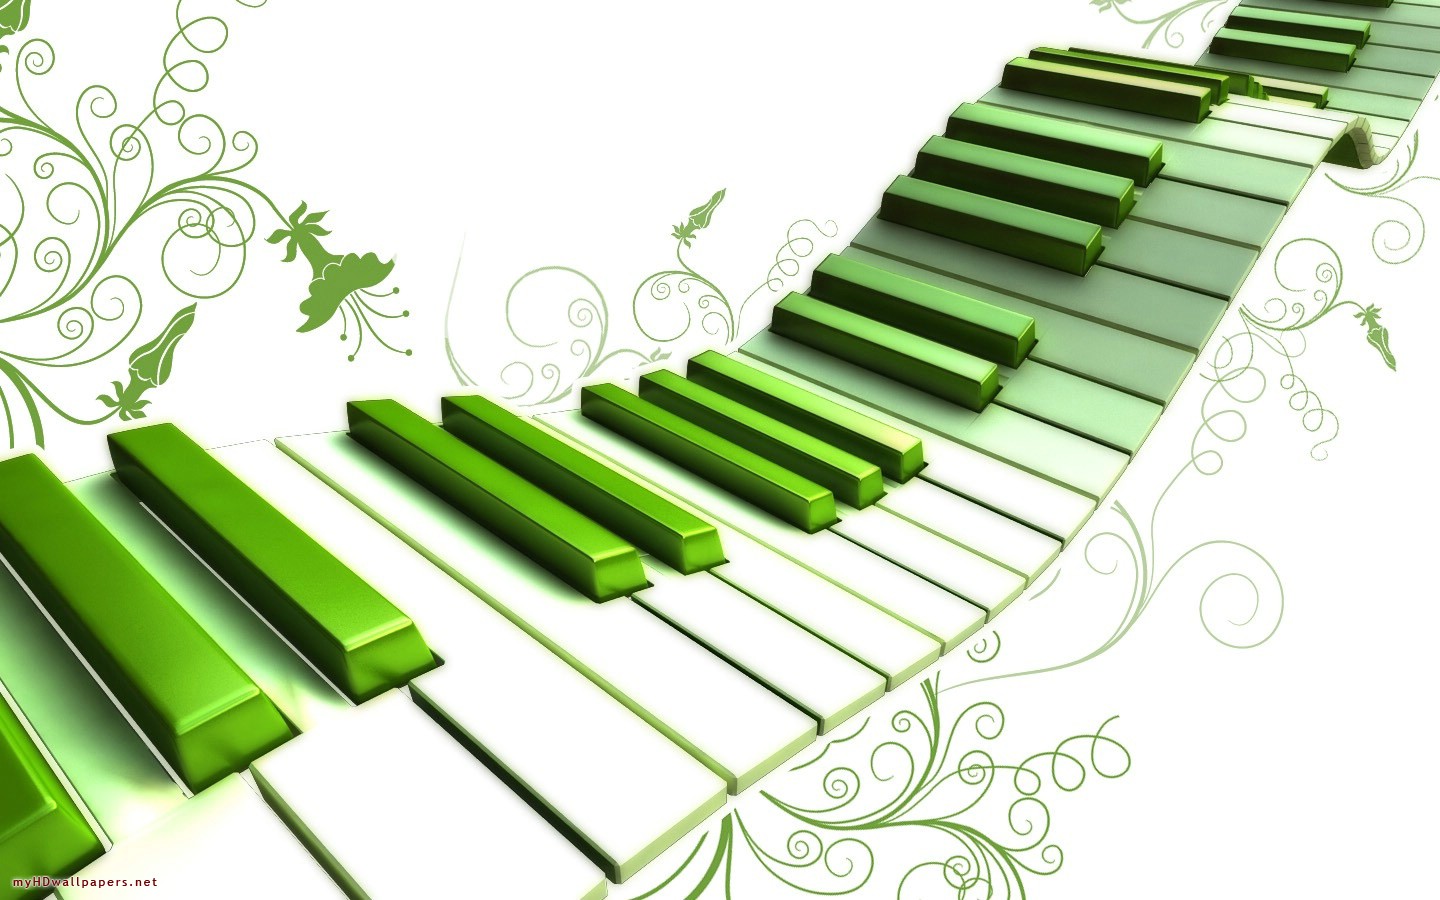 http://4.bp.blogspot.com/_TgrUPE6R6AA/TJaJ5akGbuI/AAAAAAAAA7E/eOmZj-GJRBY/s1600/Green-piano-original.jpg